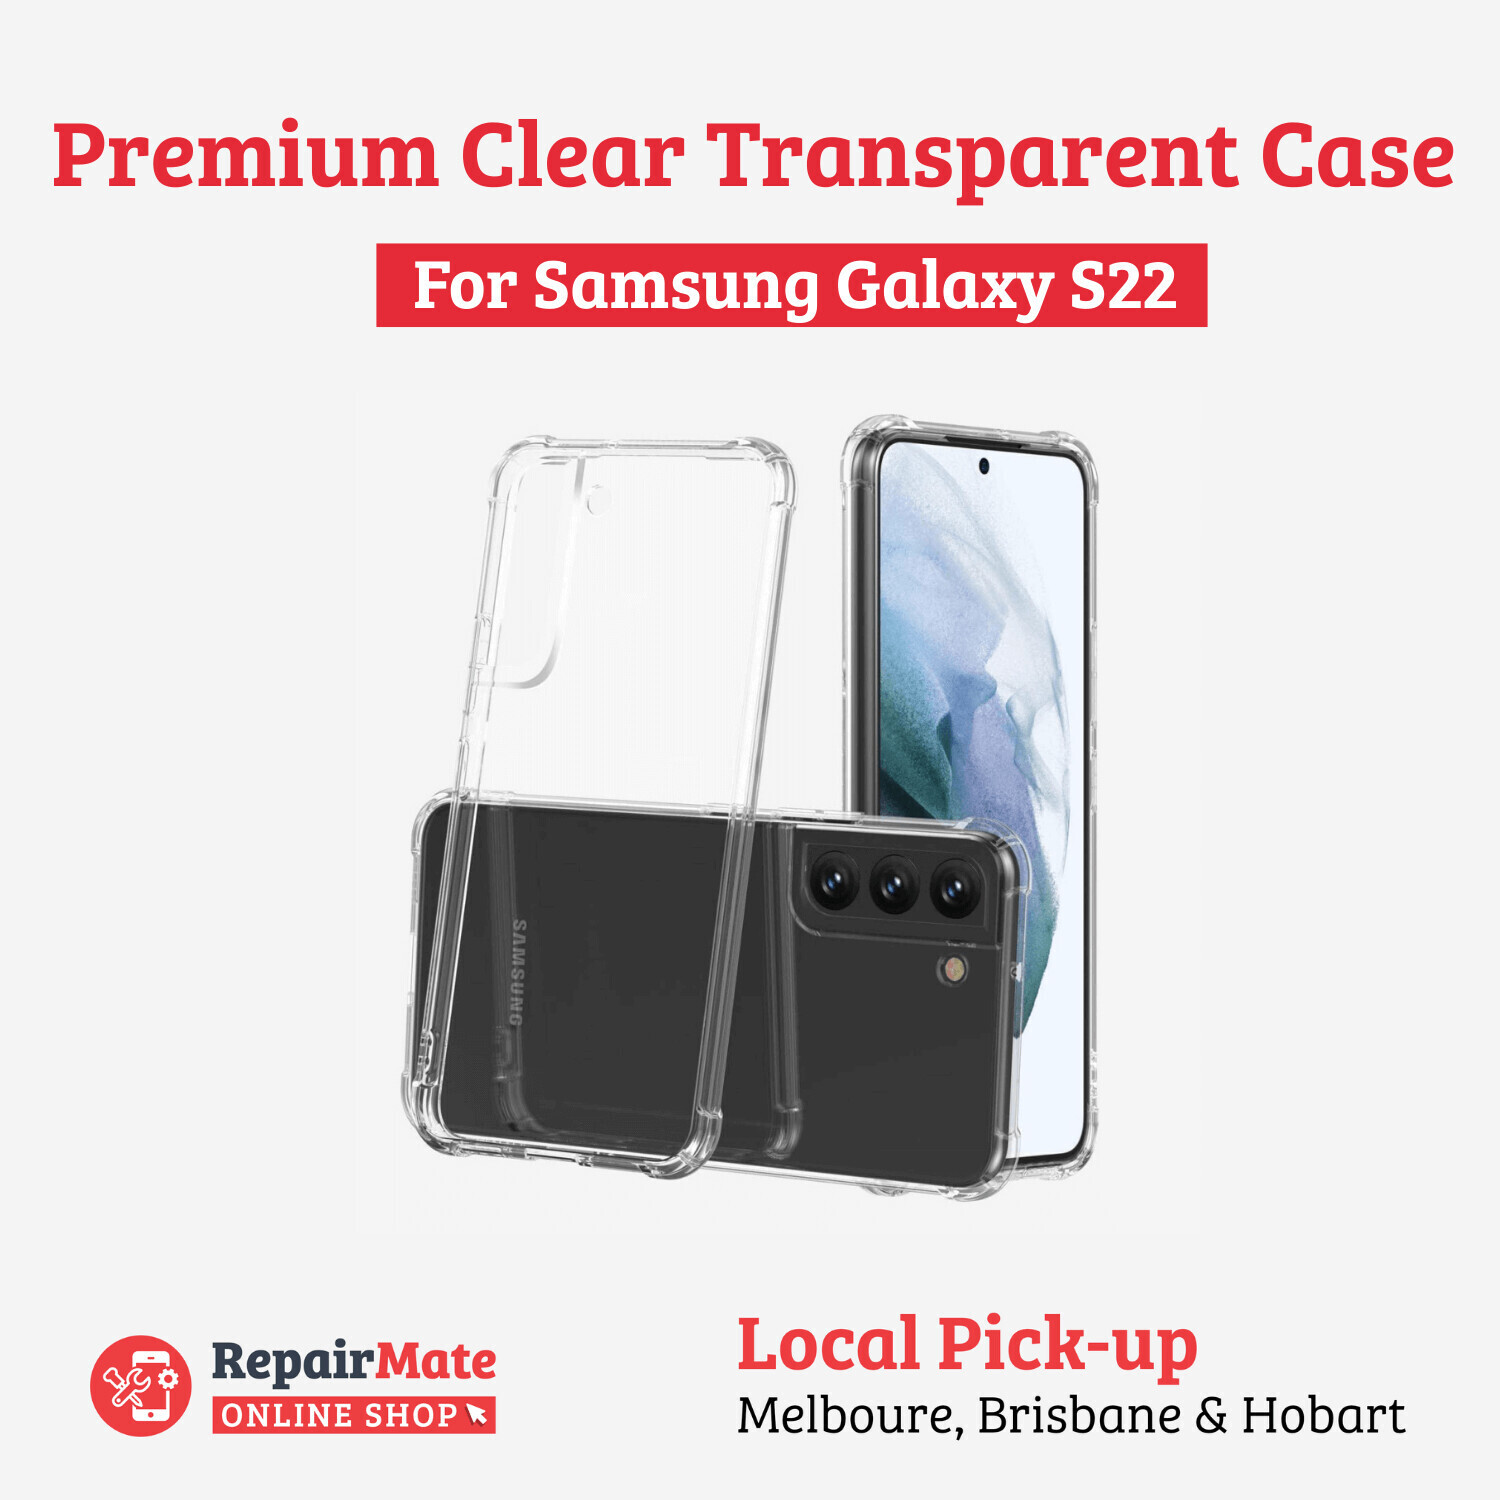 Samsung Galaxy S22 Premium Clear Transparent Case Cover